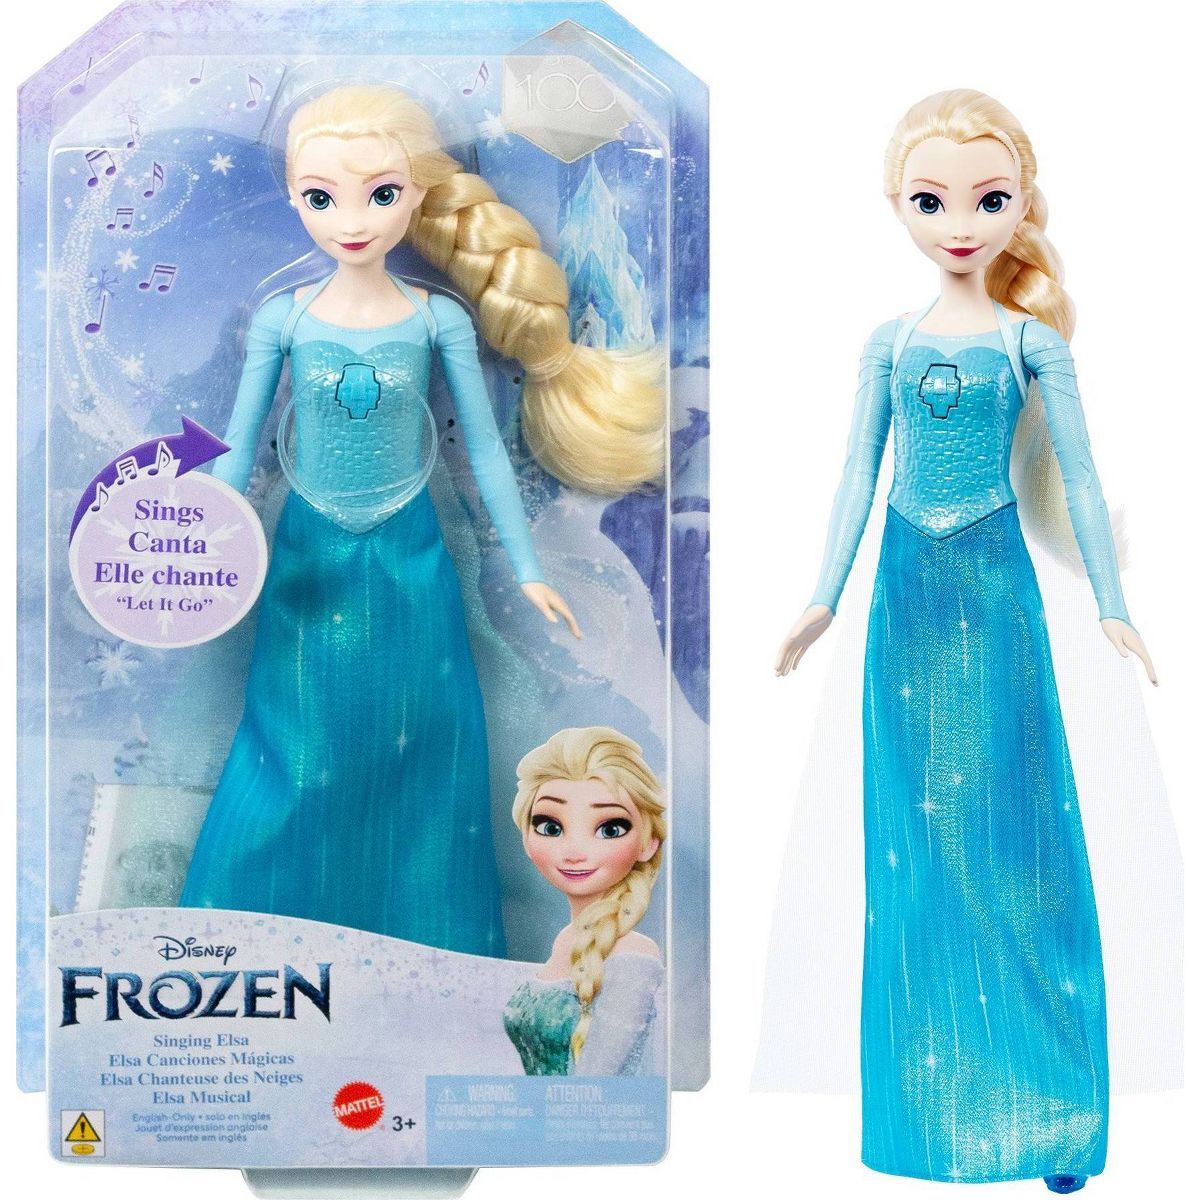 Disney Frozen Singing Elsa Doll - Sings "Let it Go" | Target